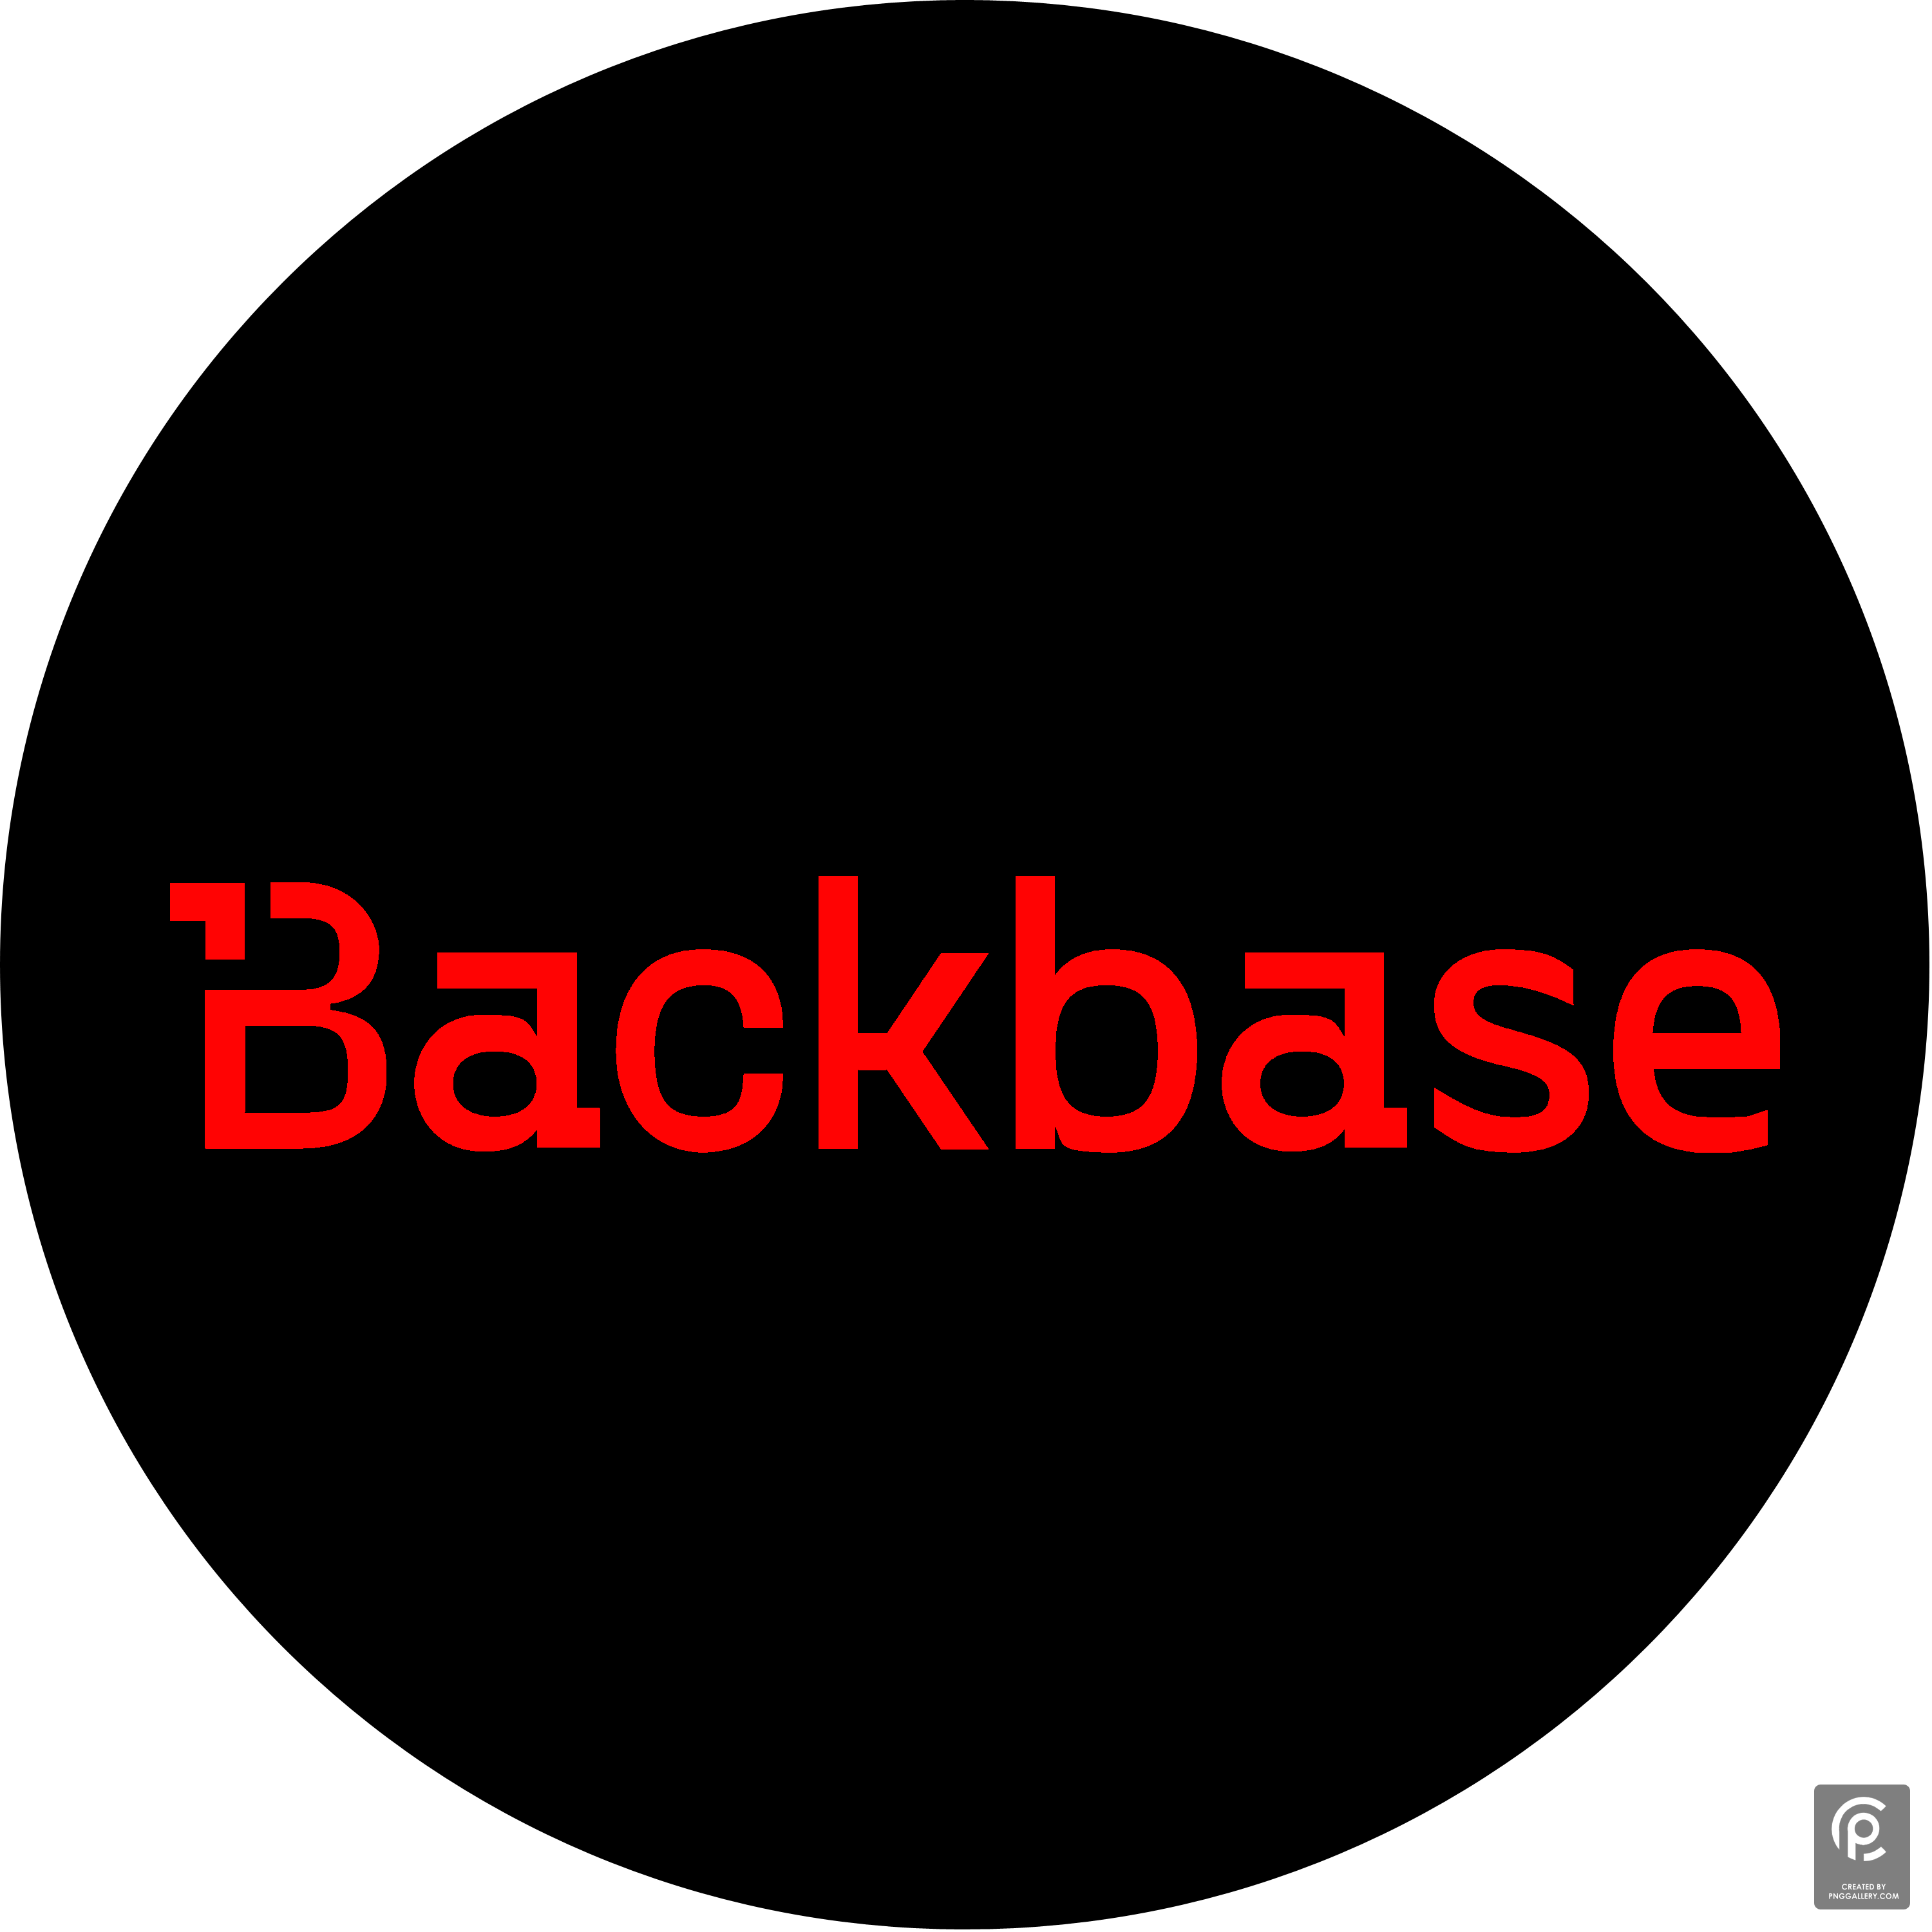 Backbase Logo Transparent Picture